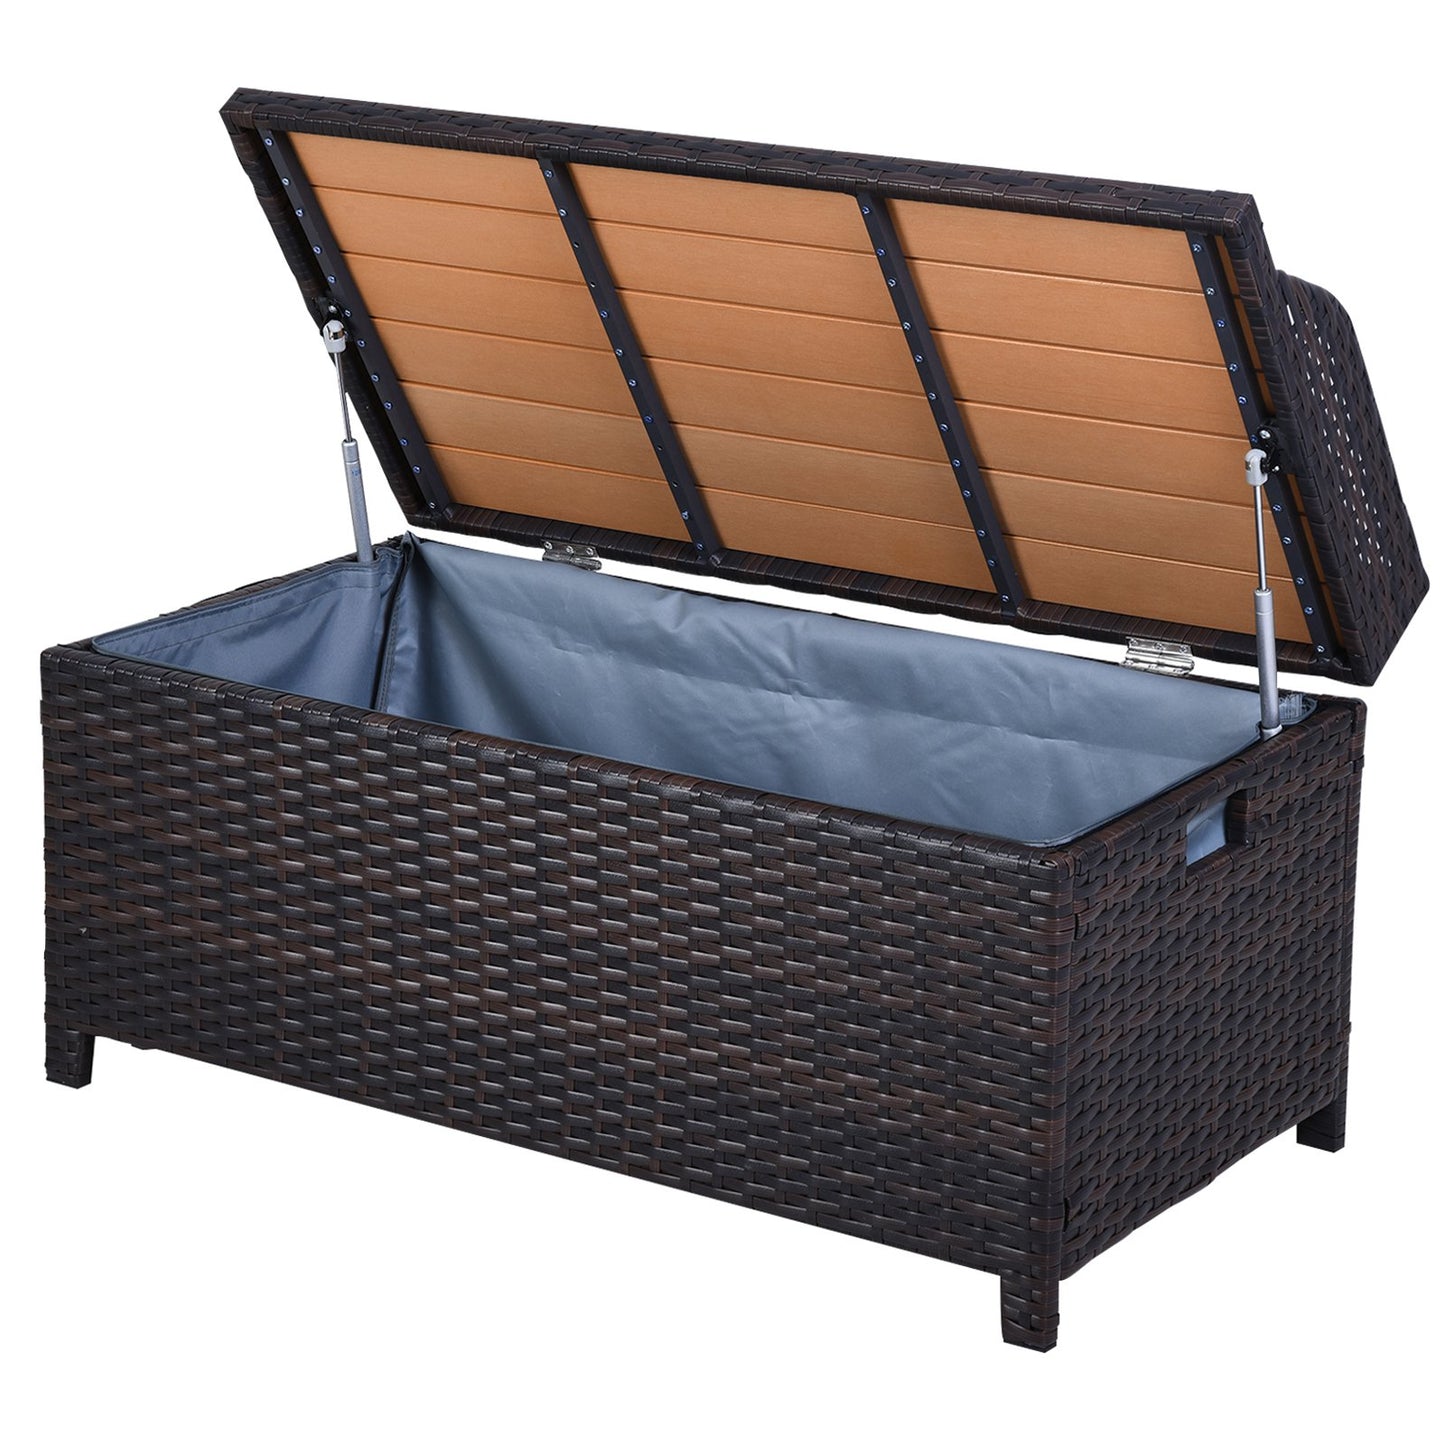 Outsunny PE Rattan Bench Patio Wicker Storage Basket Seat Furniture, 102Lx51Wx51H cm-Mixed Brown